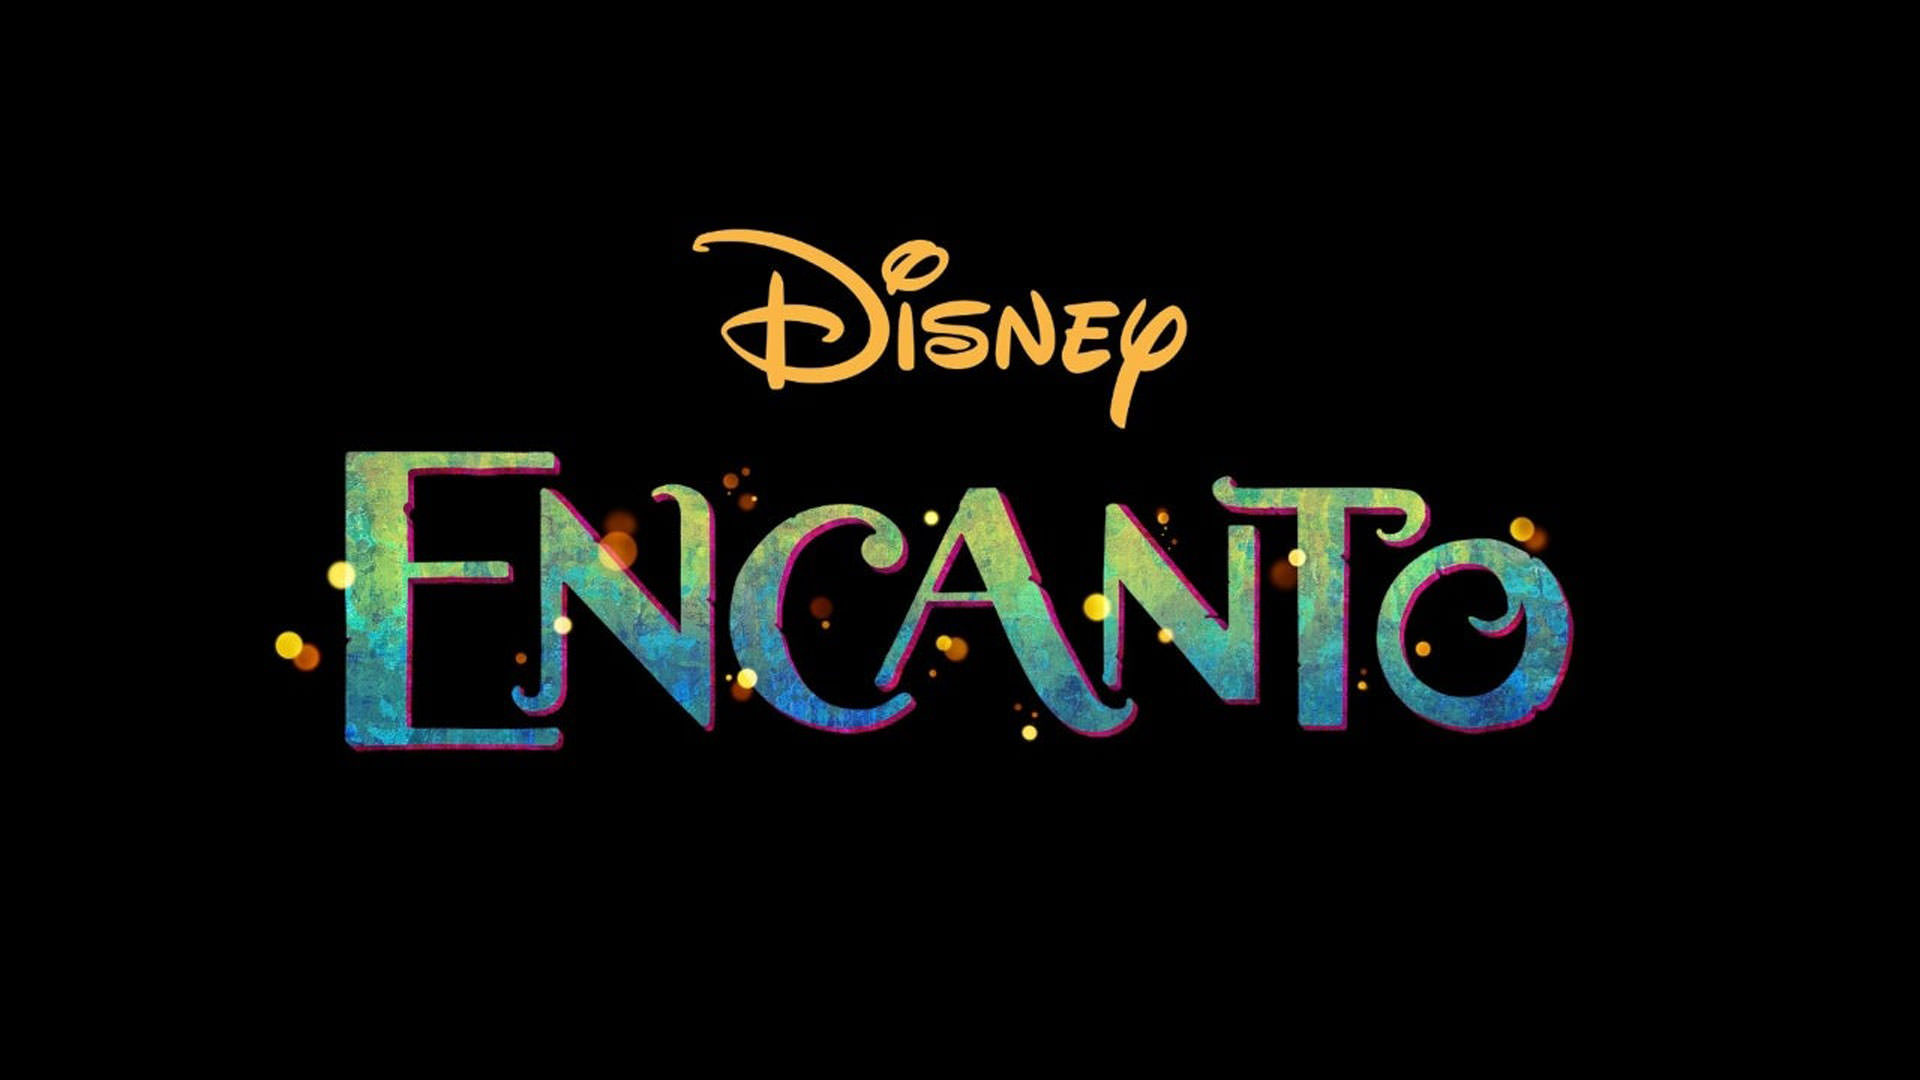 Encanto توسط سازندگان زوتوپیا معرفی شد؛ فهرست سریال ها و فیلم های انیمیشنی جدید دیزنی